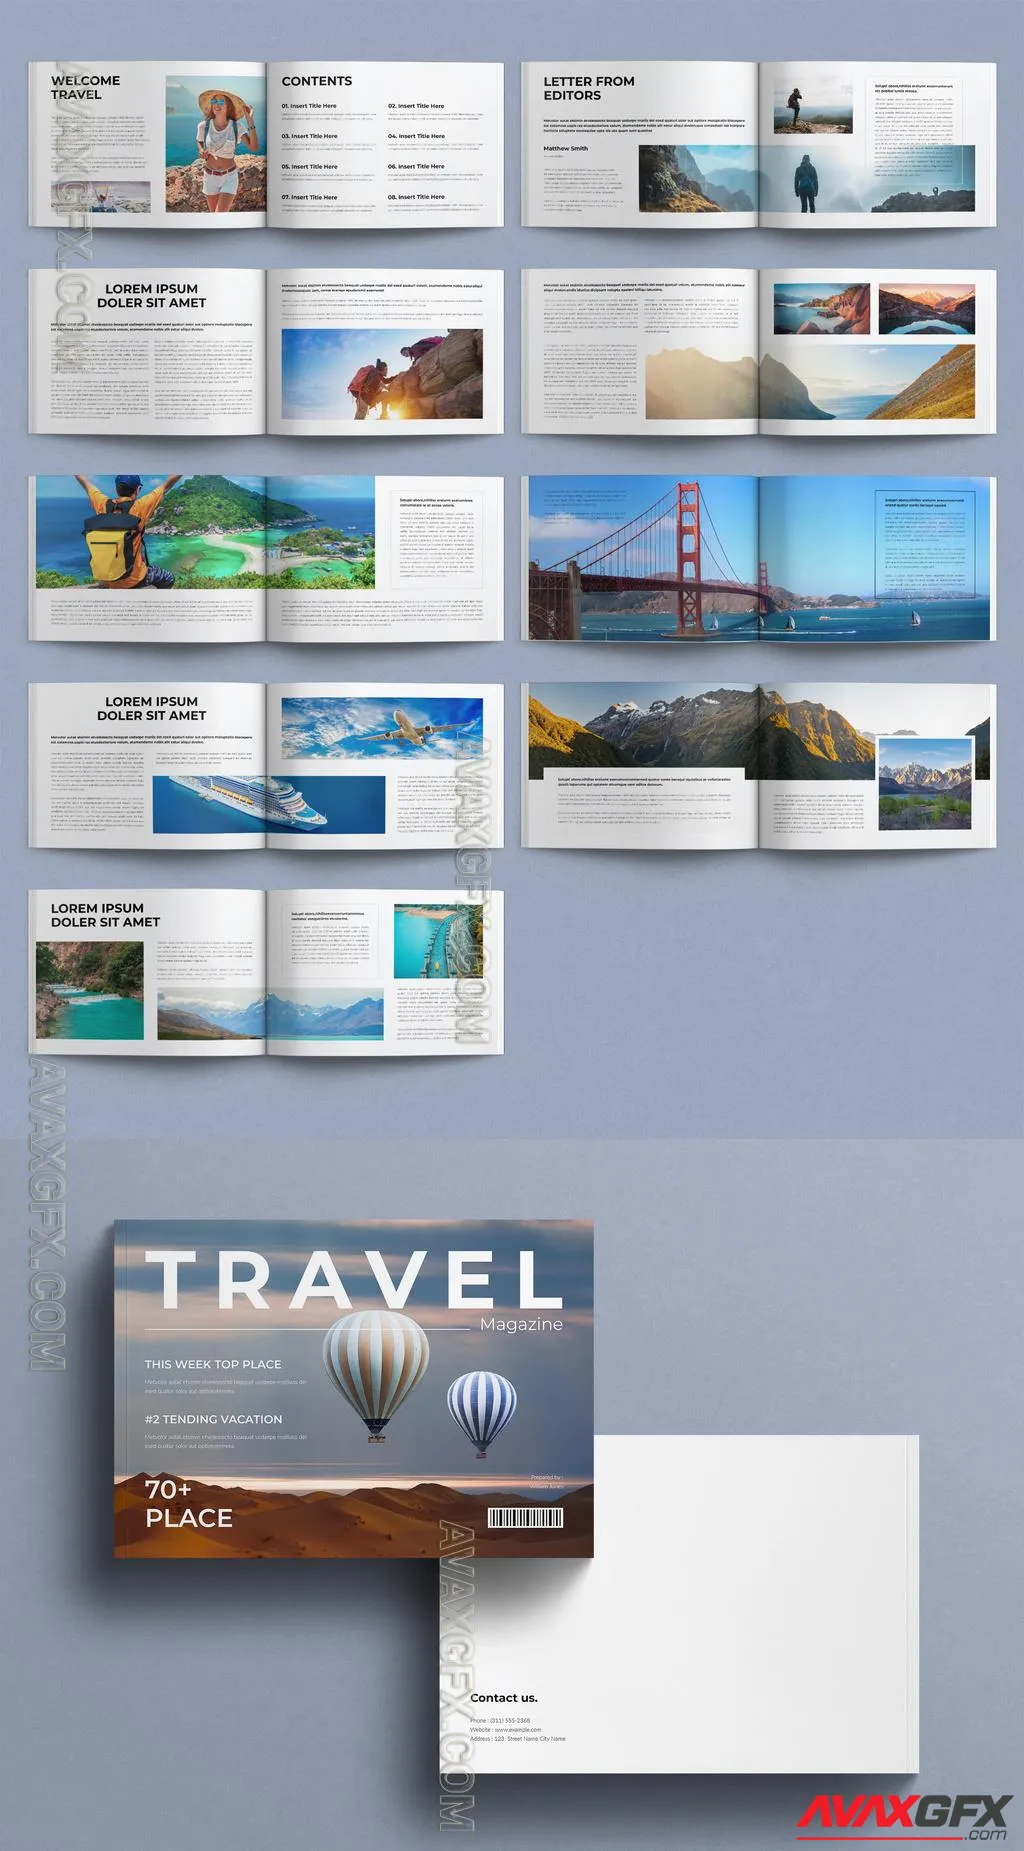 Adobestock - Travel Magazine Template Landscape 757180883